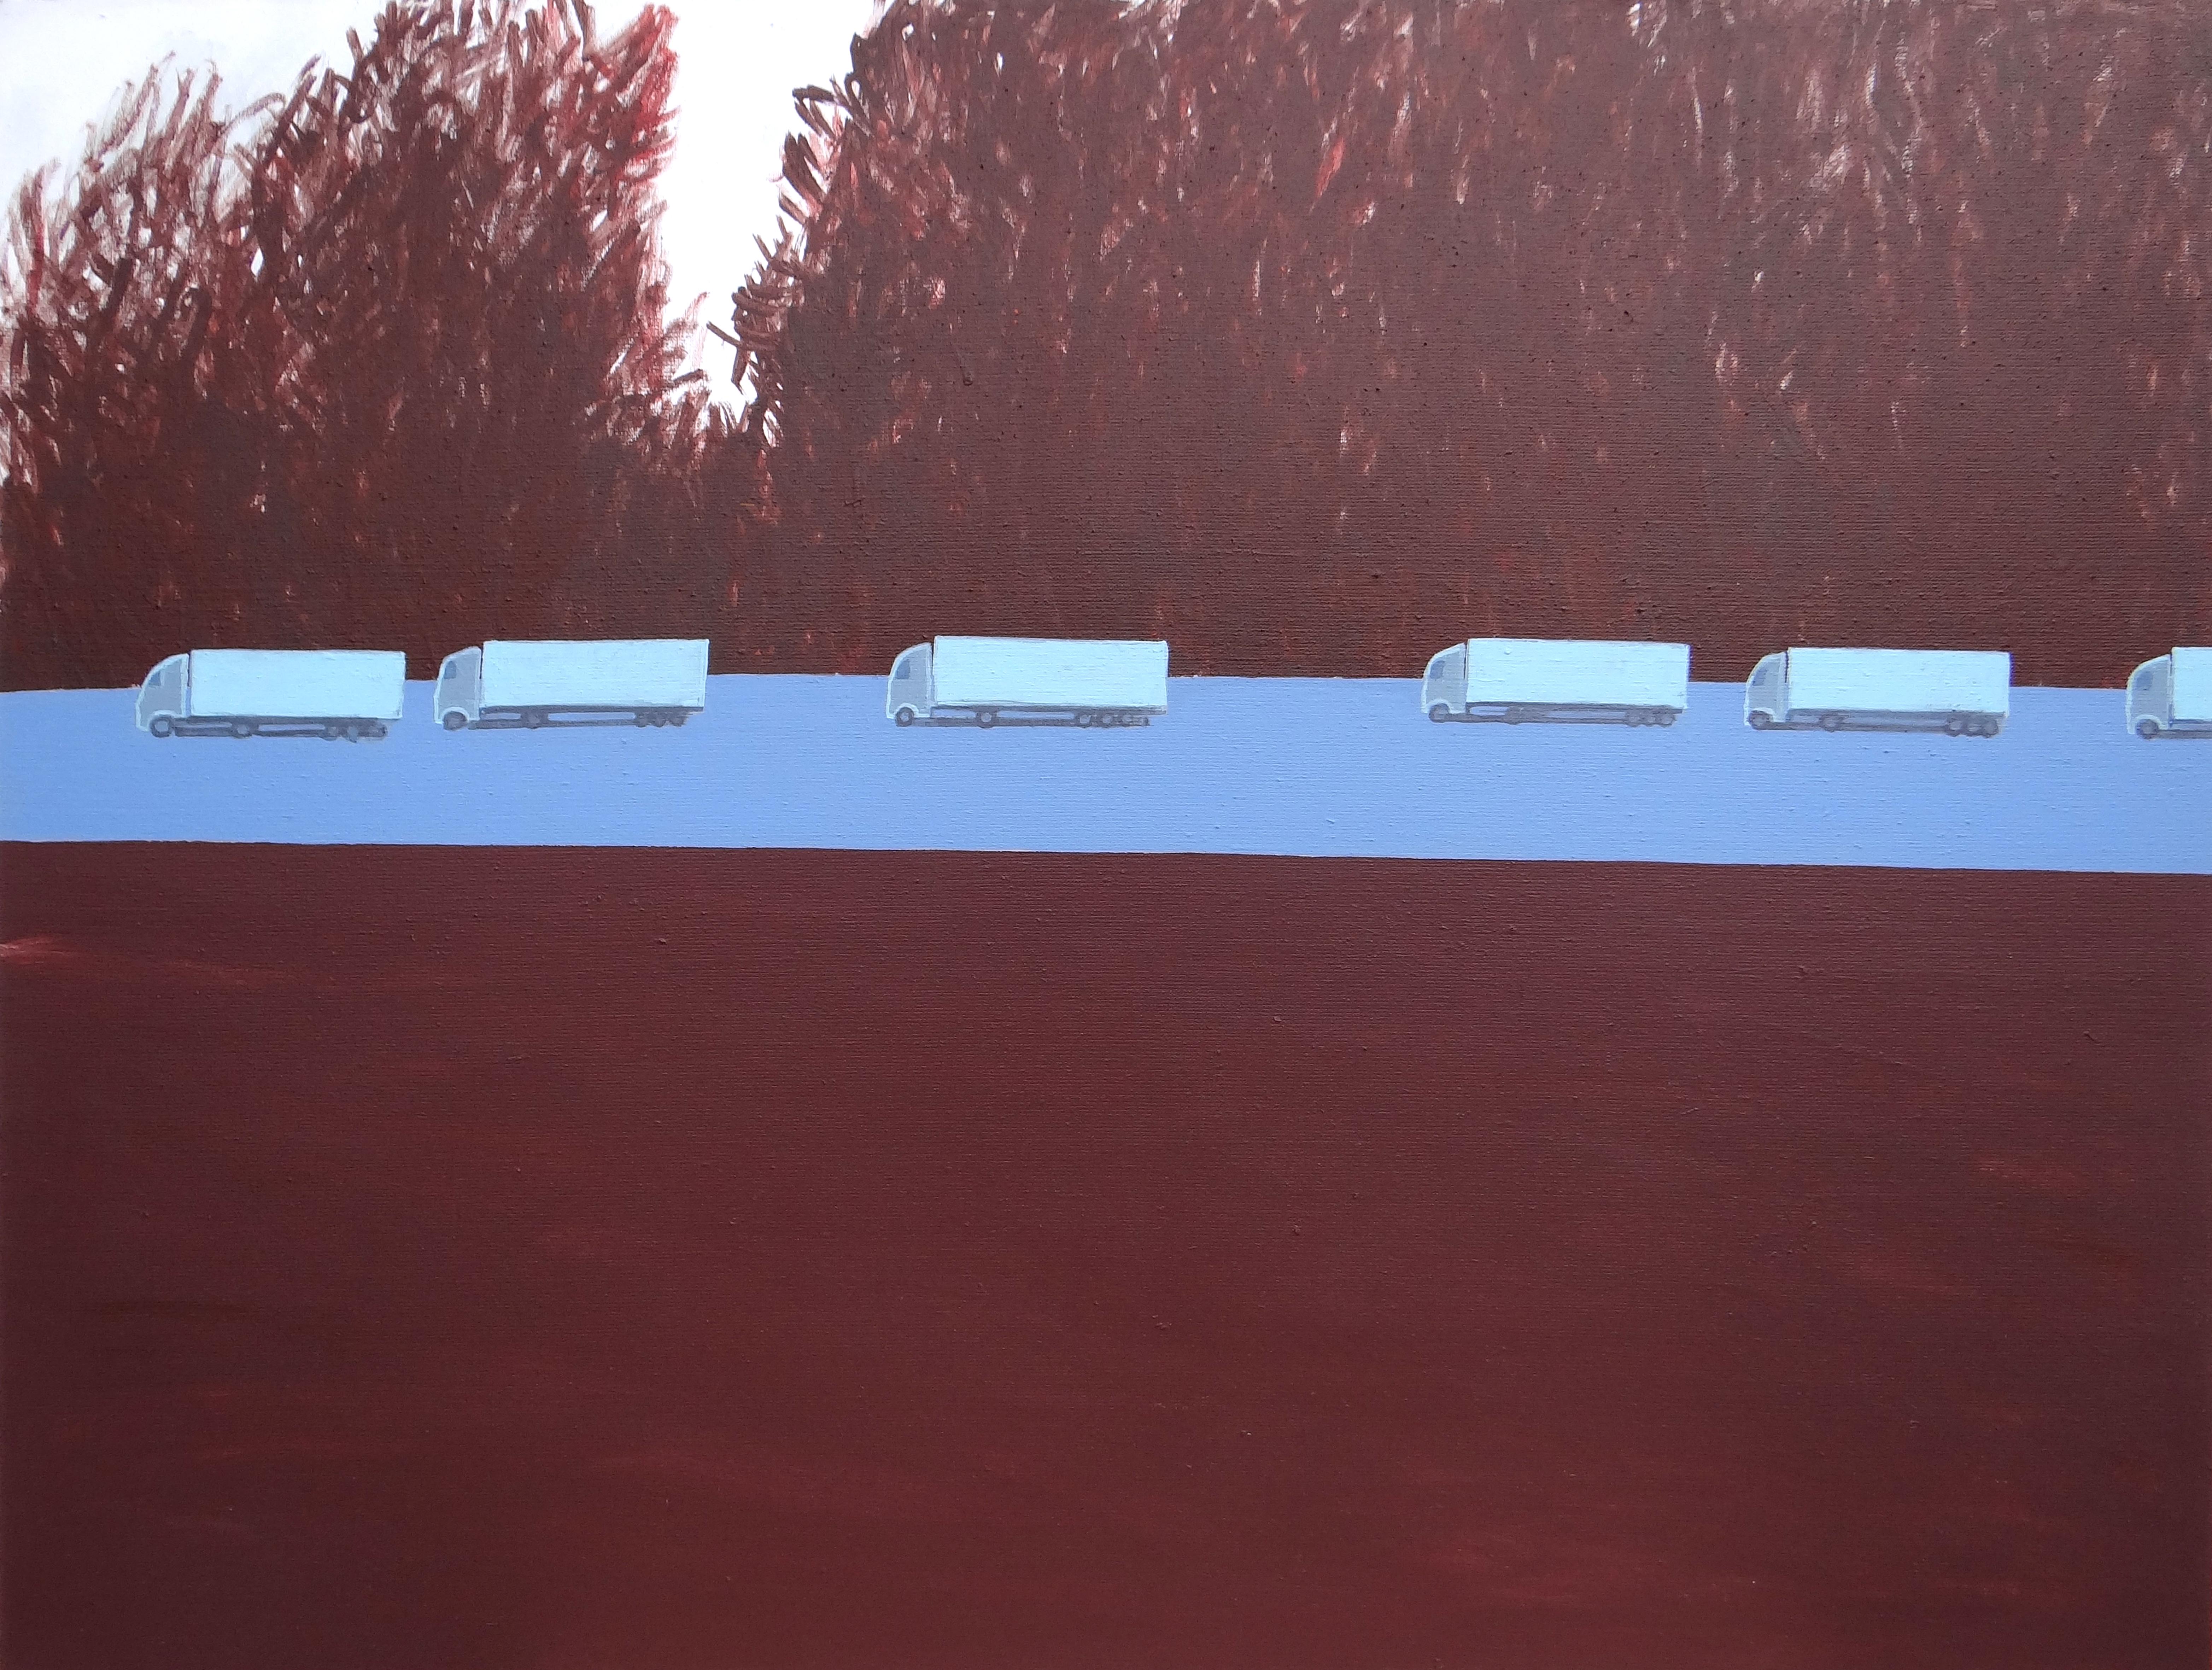 Joanna Mrozowska Figurative Painting - Column of Trucks 1 - Contemporary Expressive Landscape Painting, Trees Avenue